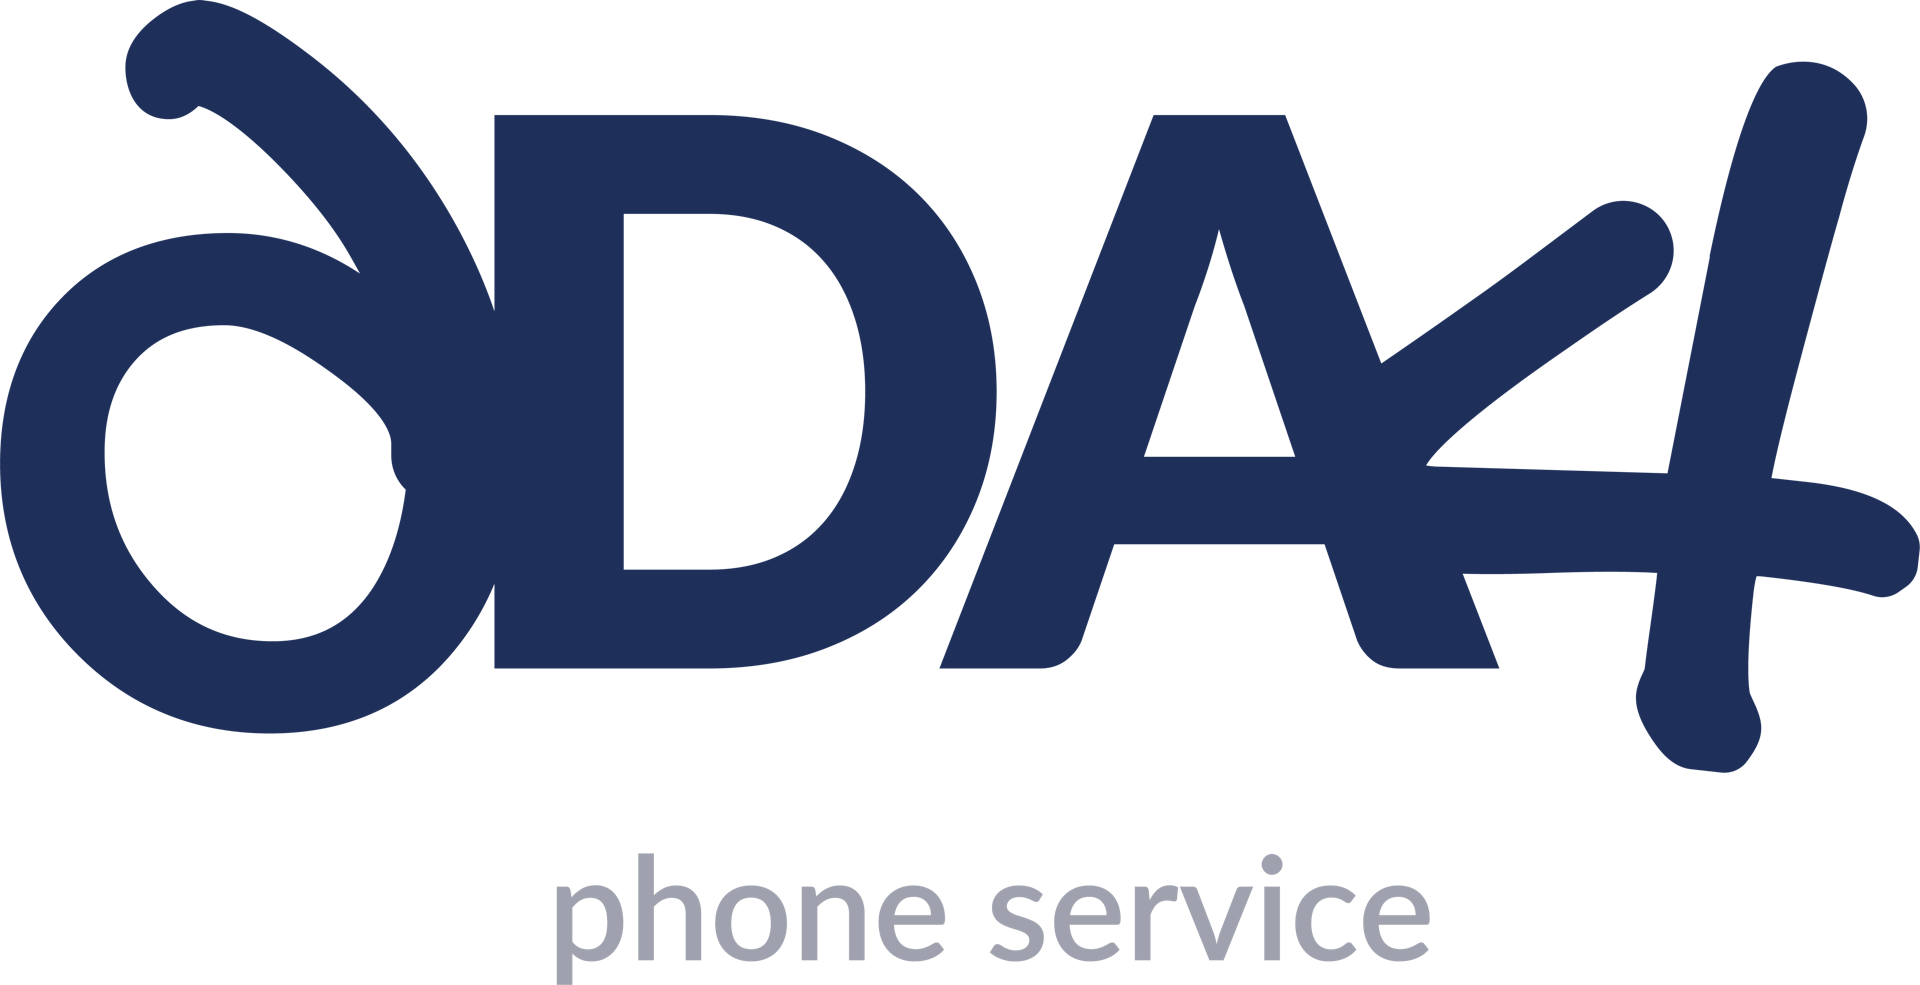 6da4 Phone Service